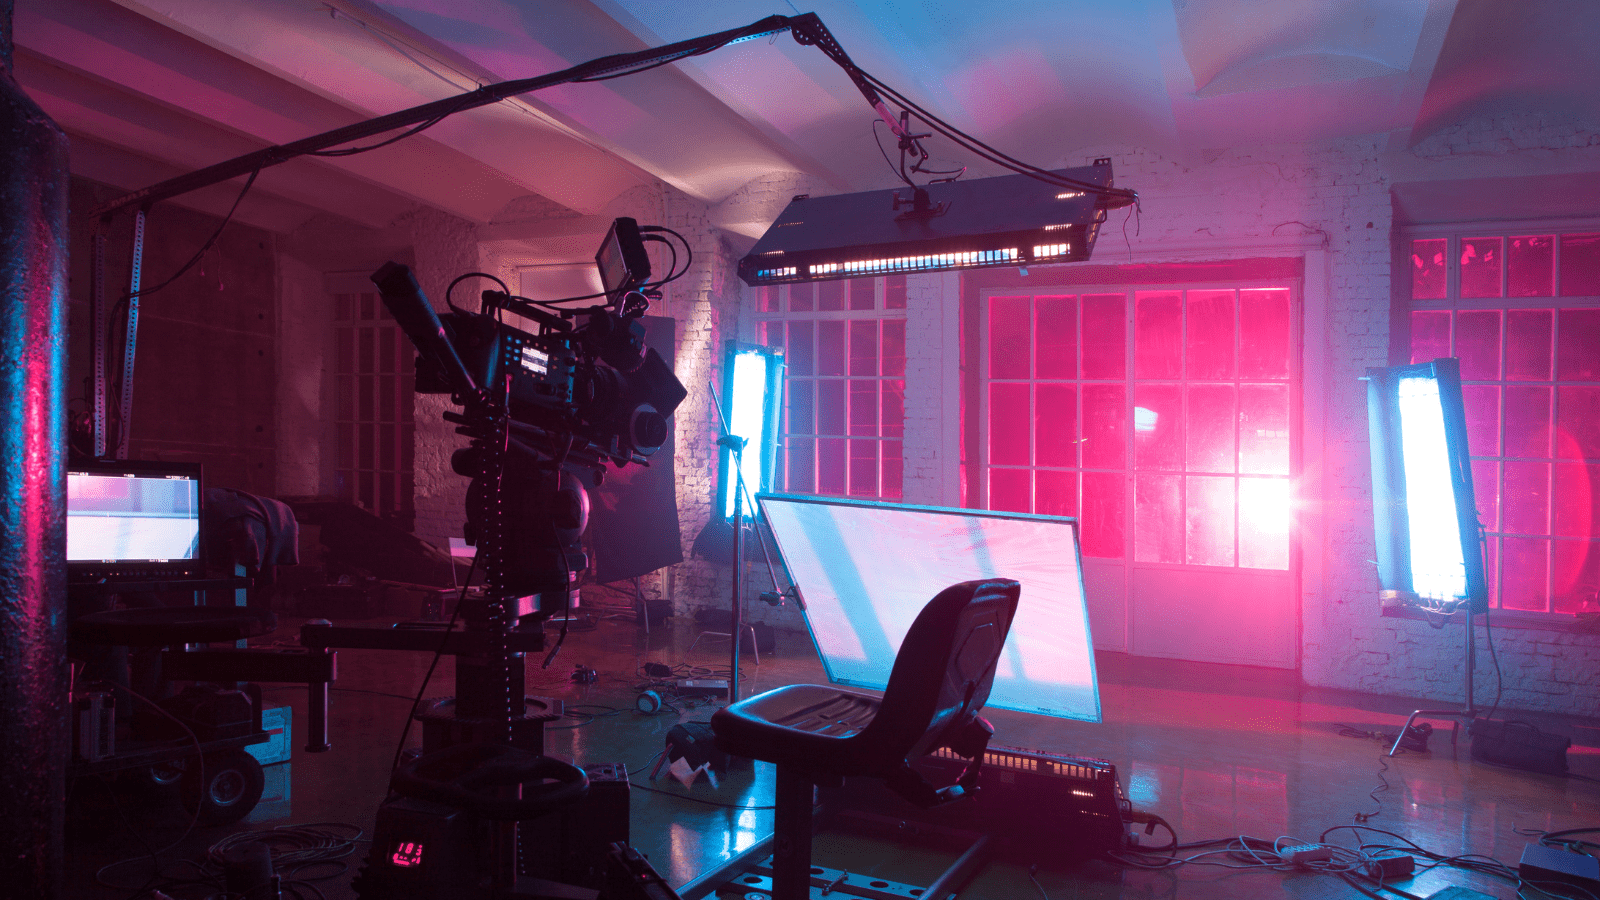 A studio with pink lighting